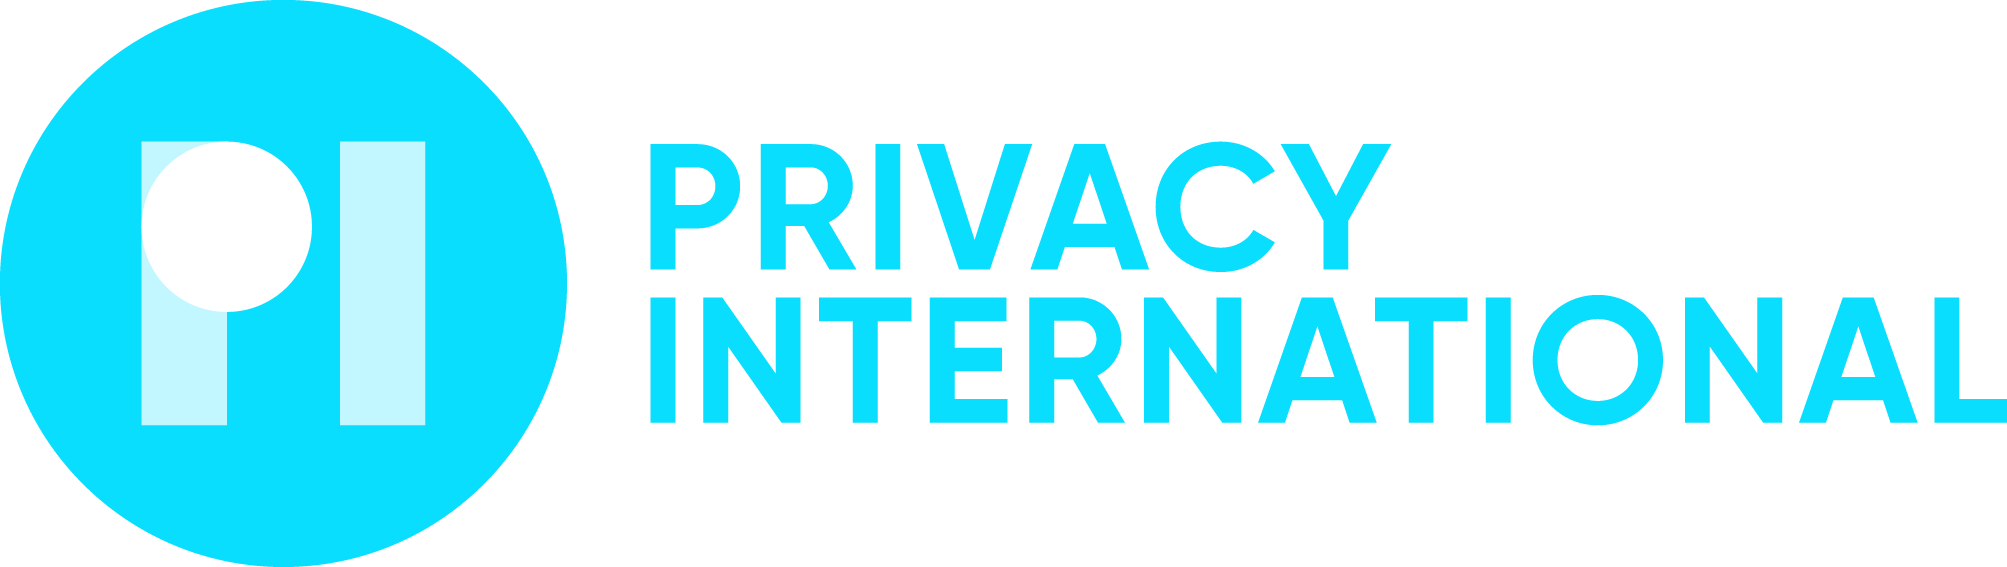 PI Privacy International RGB Solid